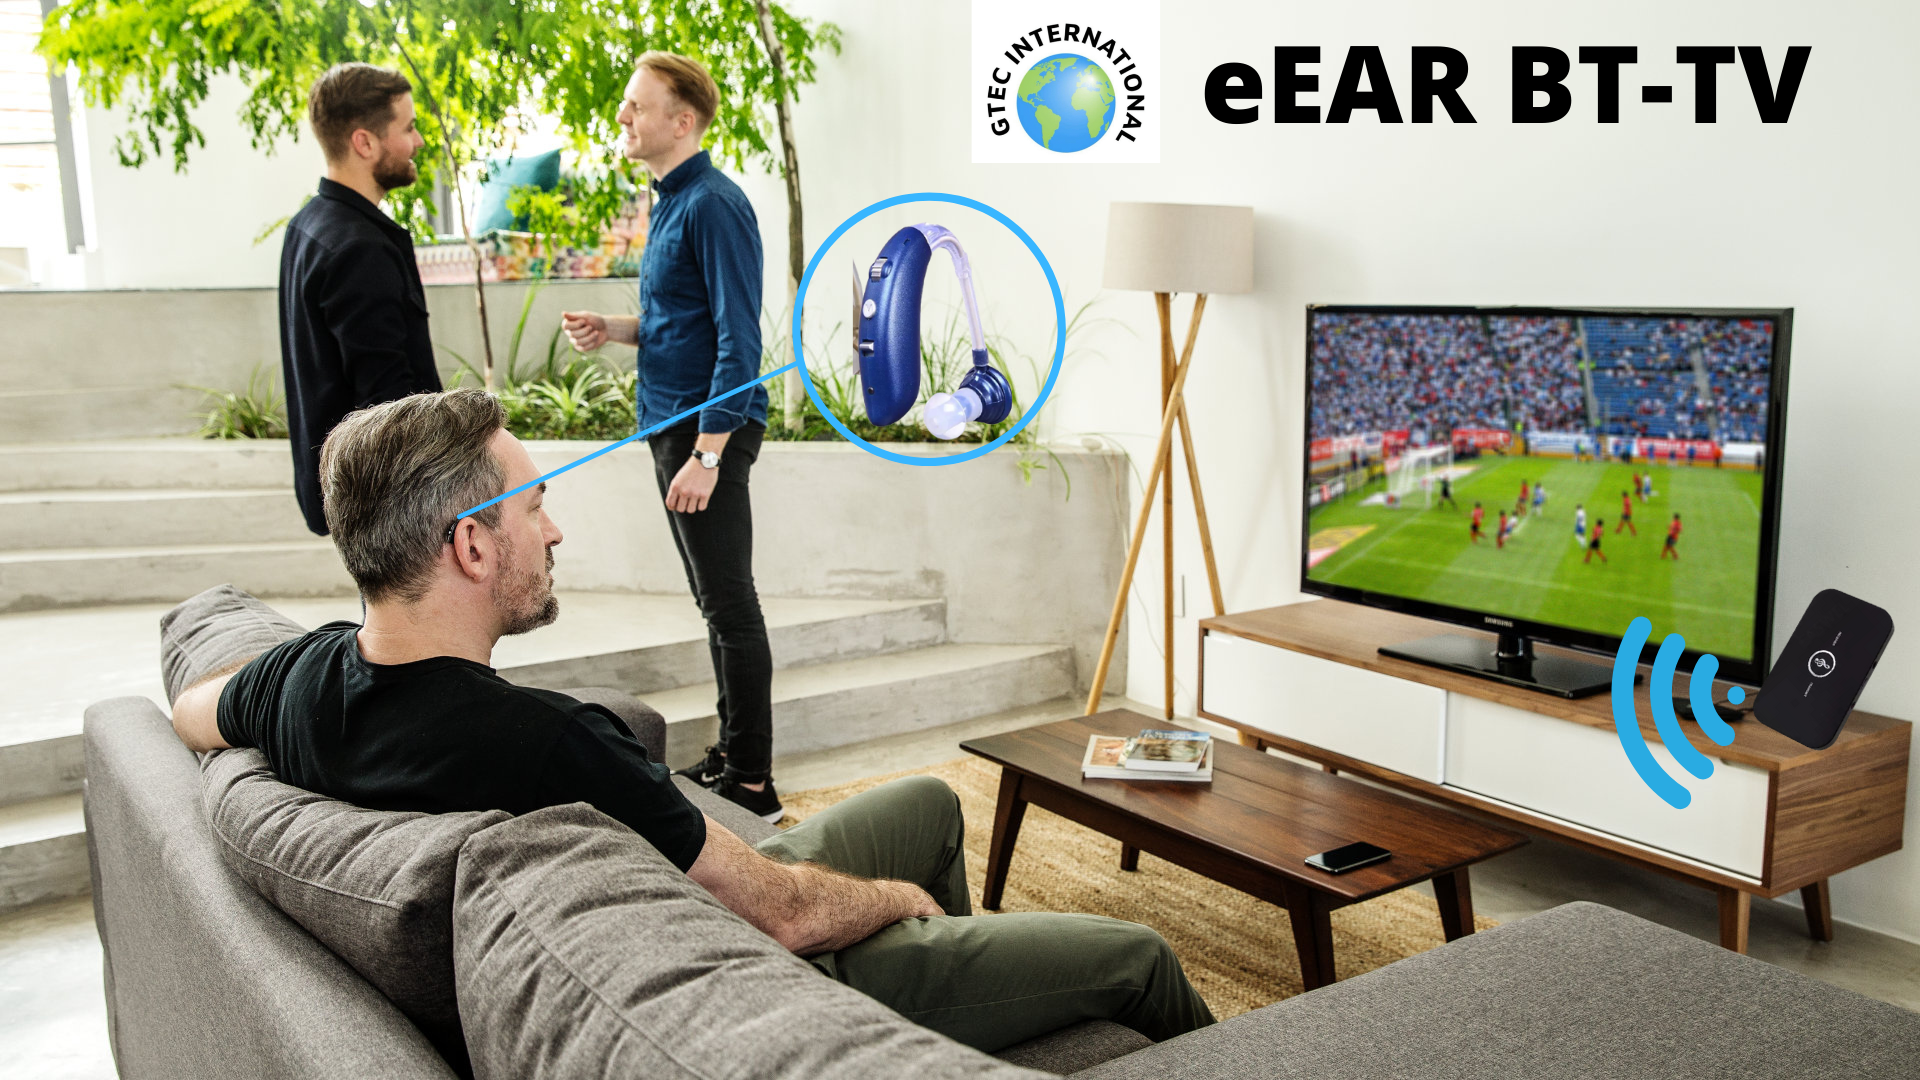 eEAR 蓝牙电视系统 eEAR BT-TV-01 在美国设计和制造的助听器用户和听力障碍者收听电视的完美解决方案